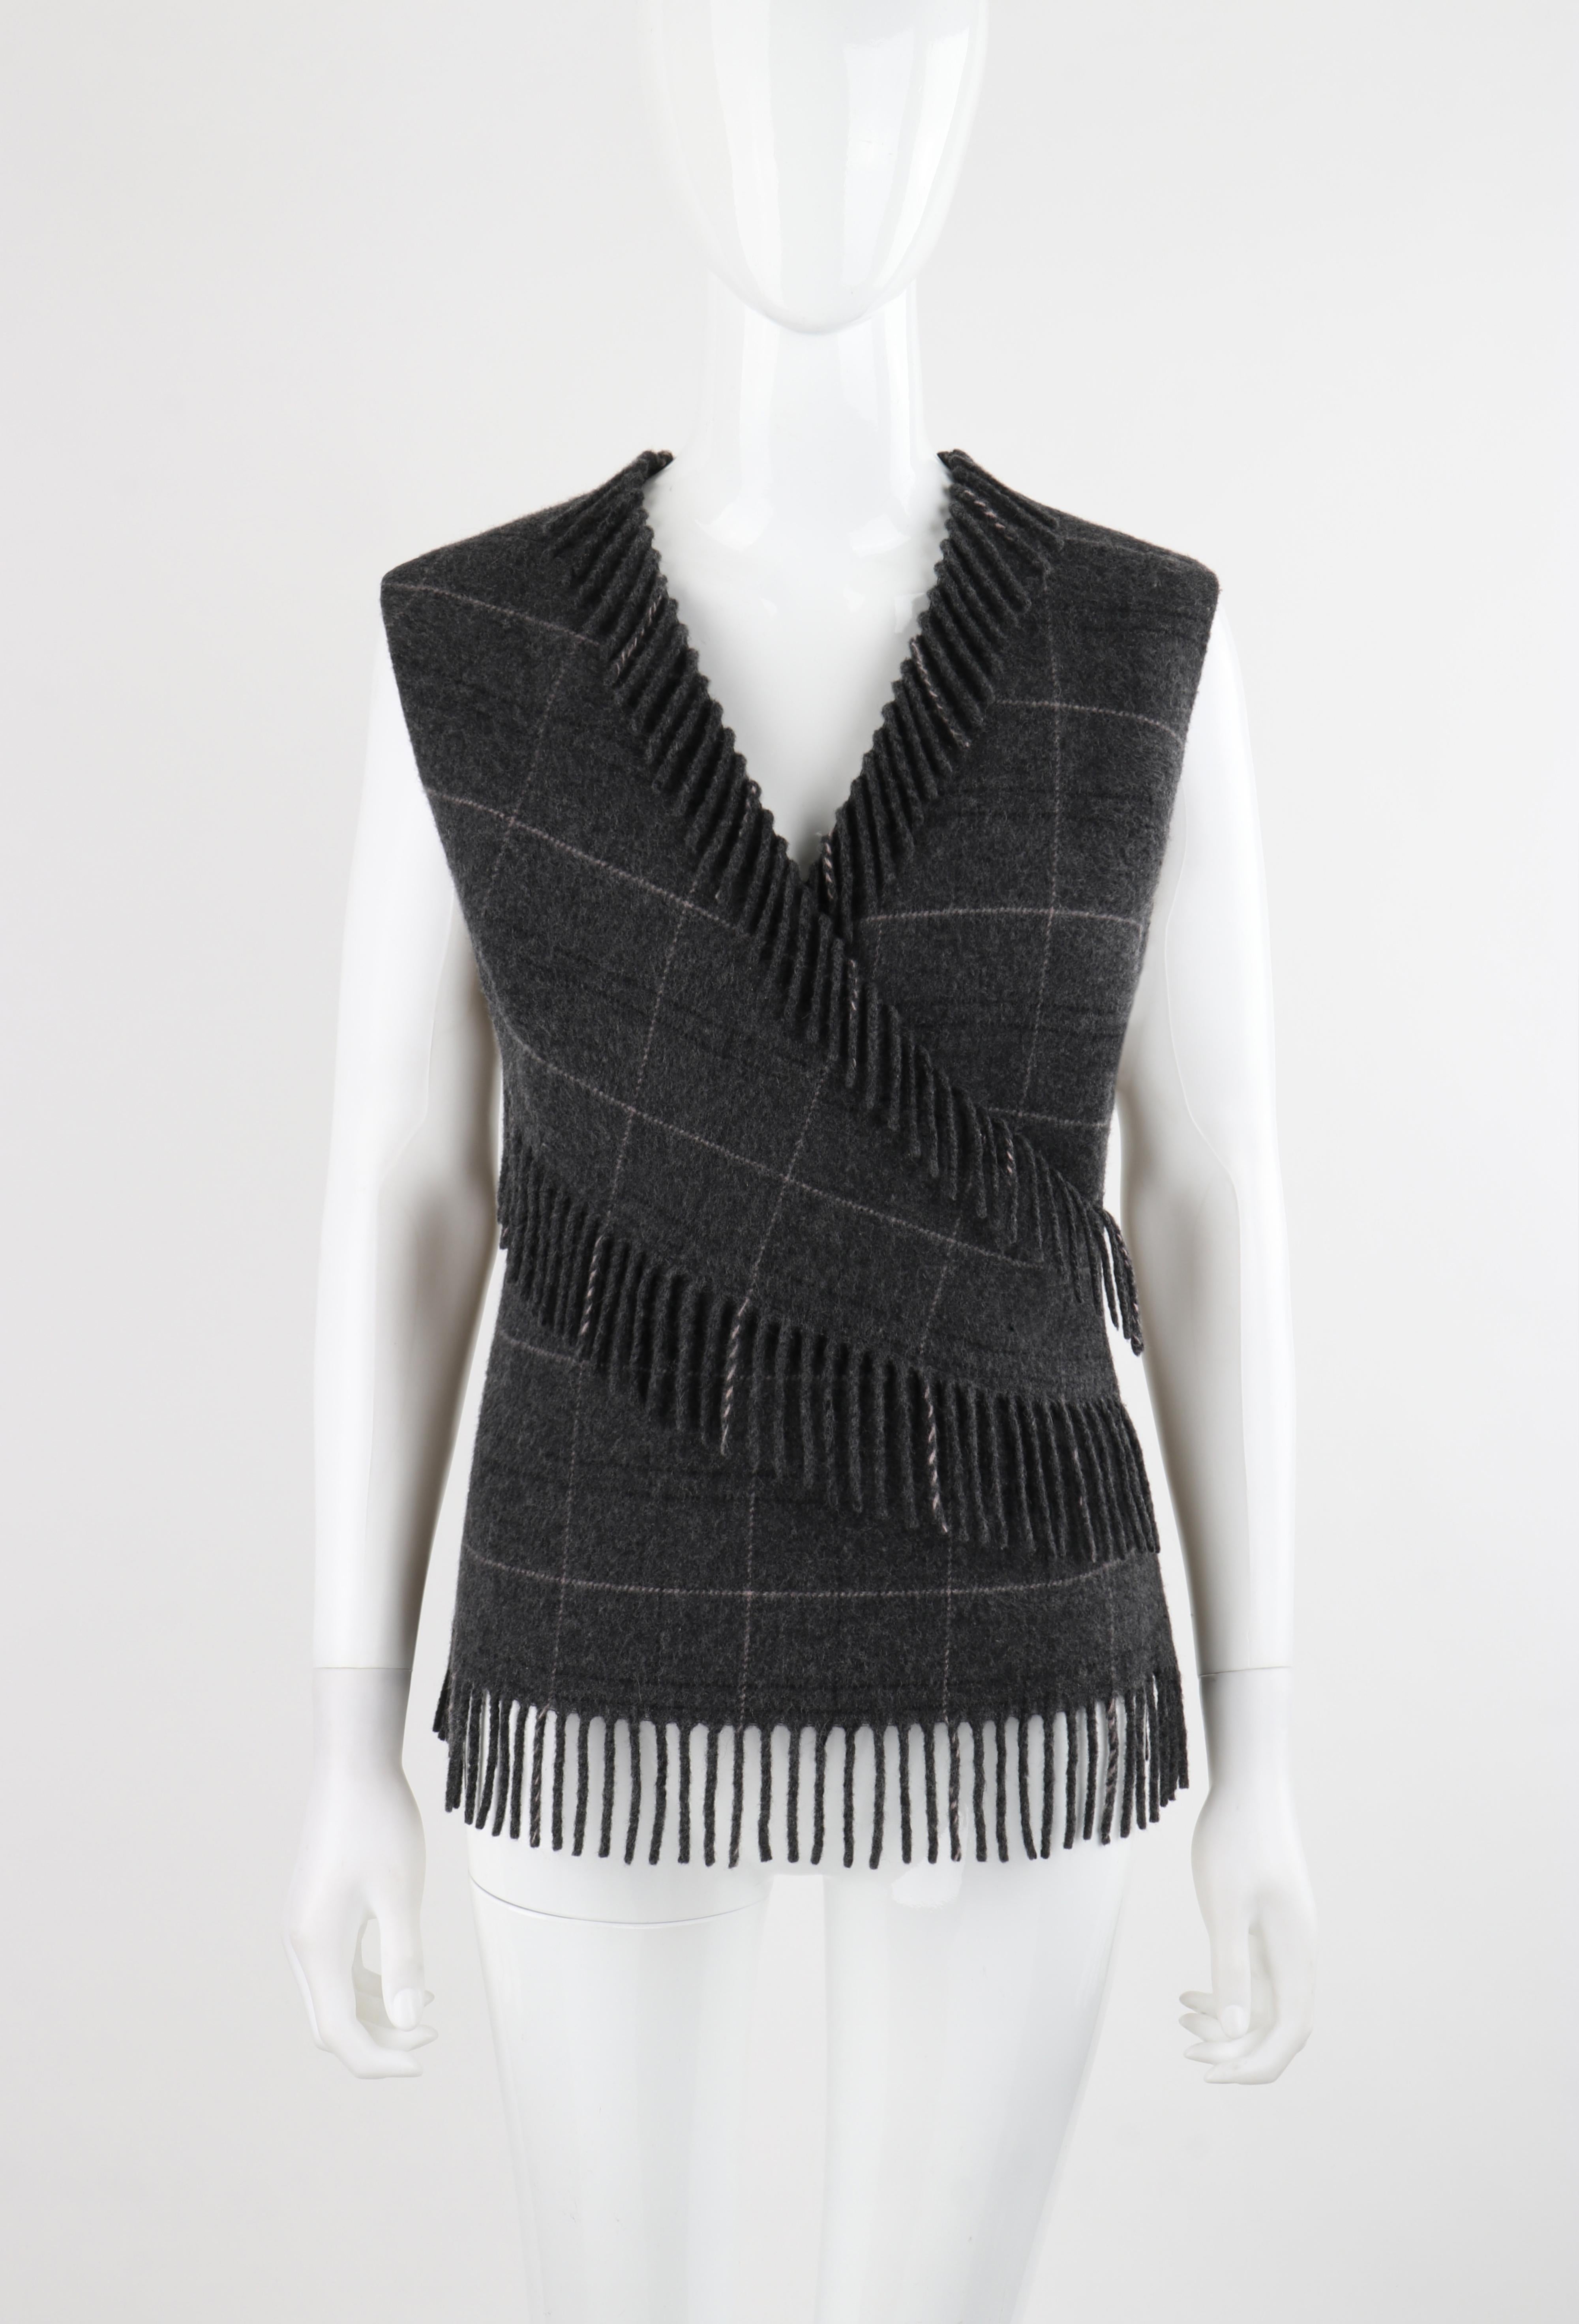 ALEXANDER McQUEEN F/W 1999 Gray Wool Plaid Wrap Fringe Sleeveless Vest Knit Top

Brand / Manufacturer: Alexander McQueen 
Collection: F/W 1999 